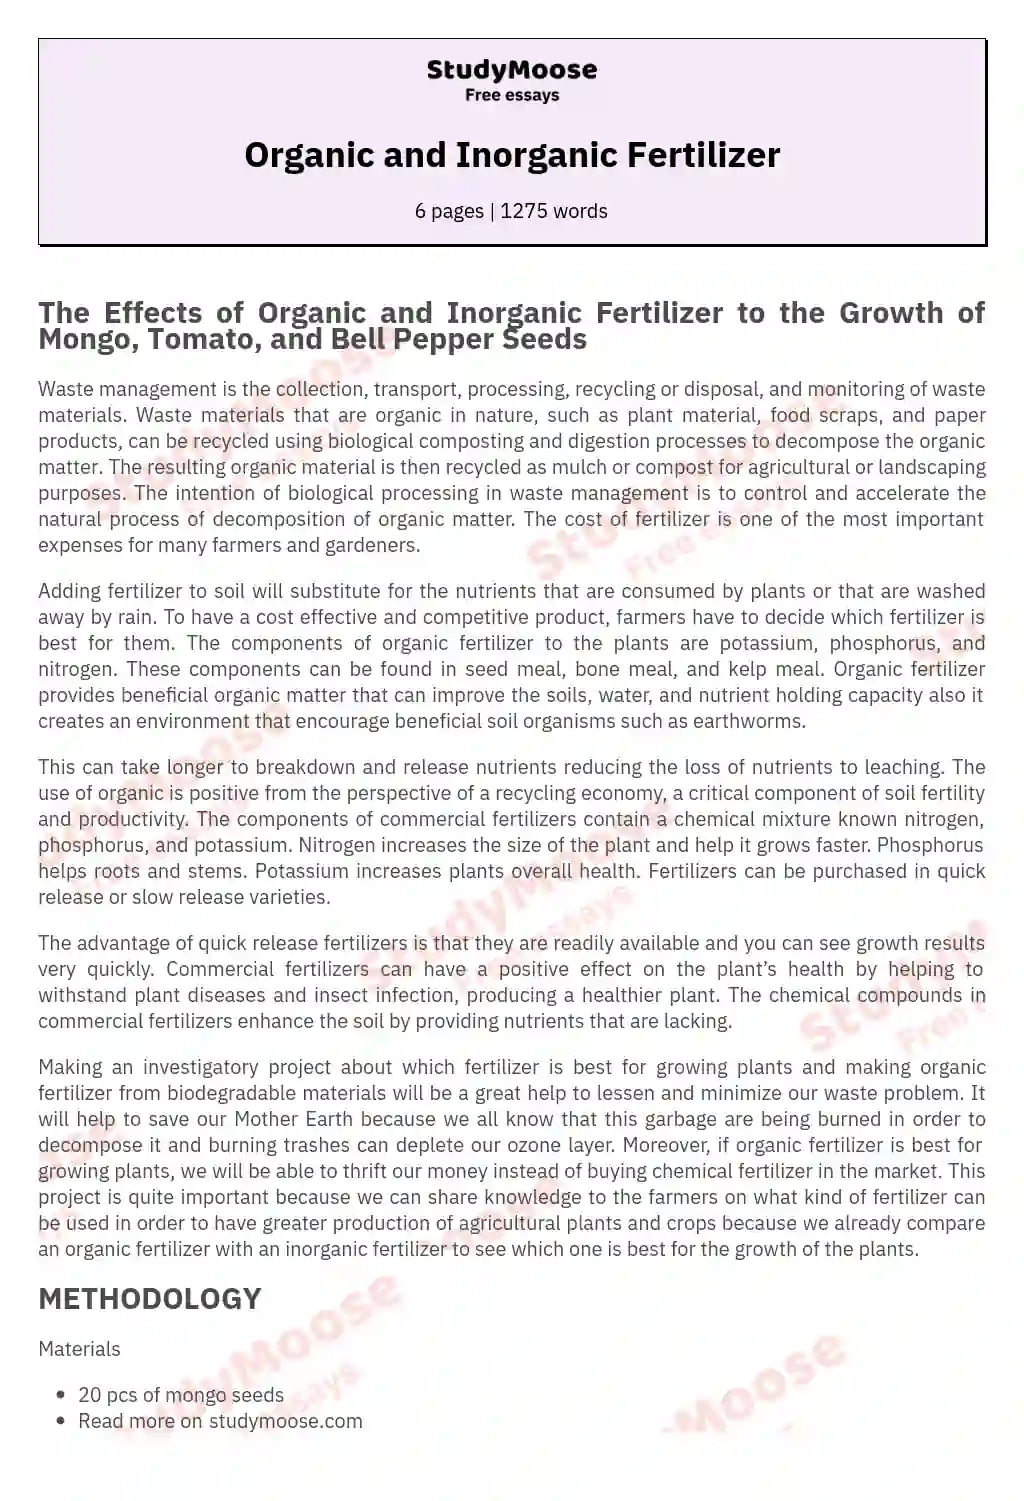 Organic and Inorganic Fertilizer essay